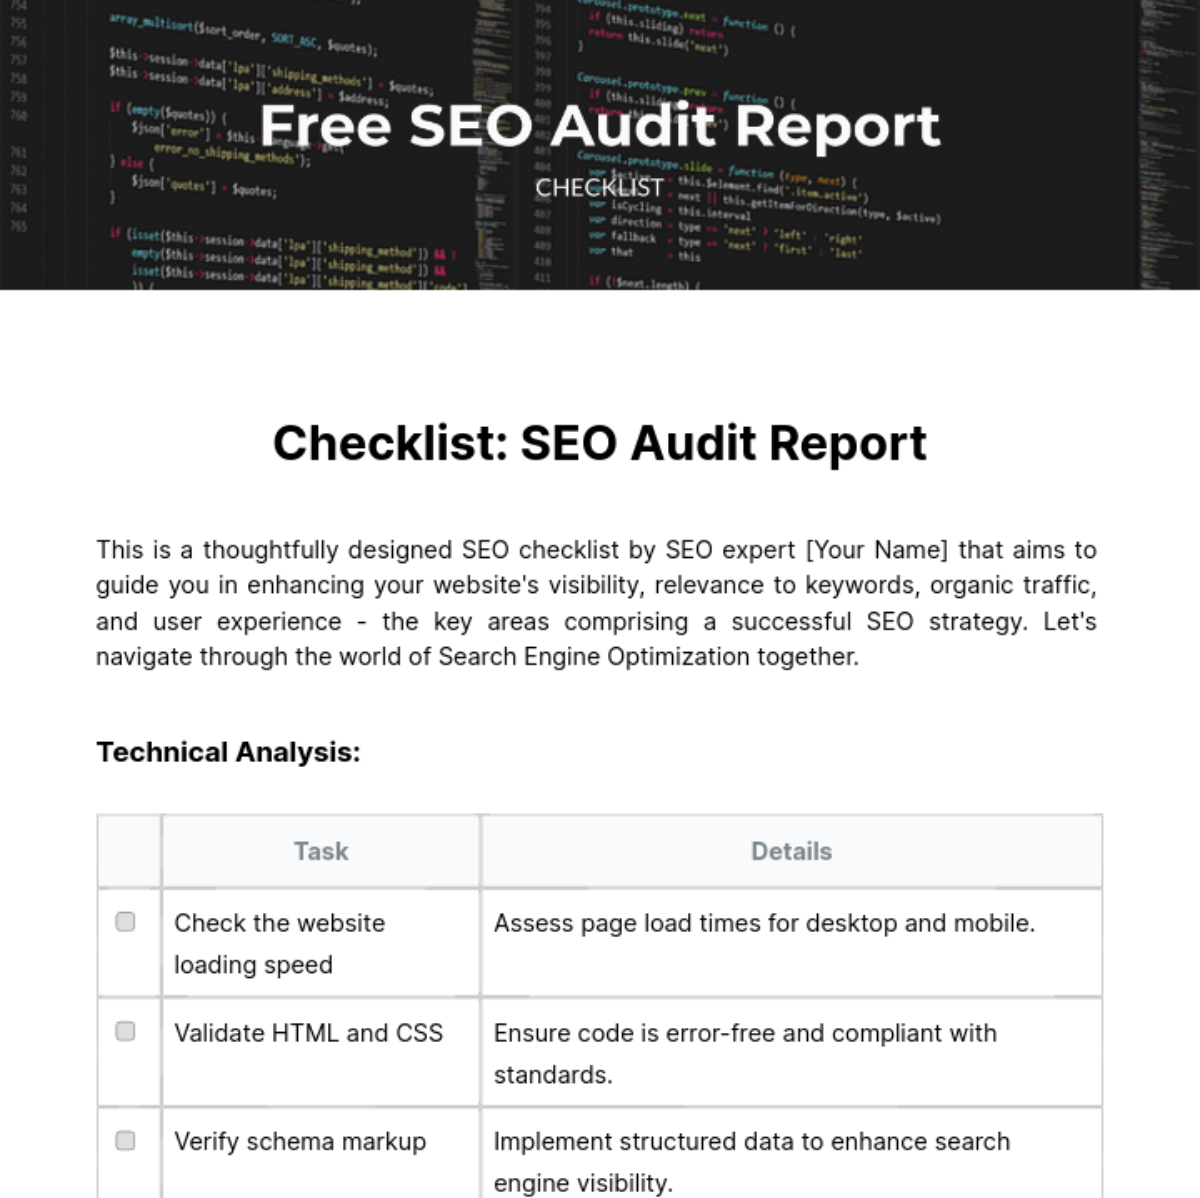 SEO Audit Report Checklist Template